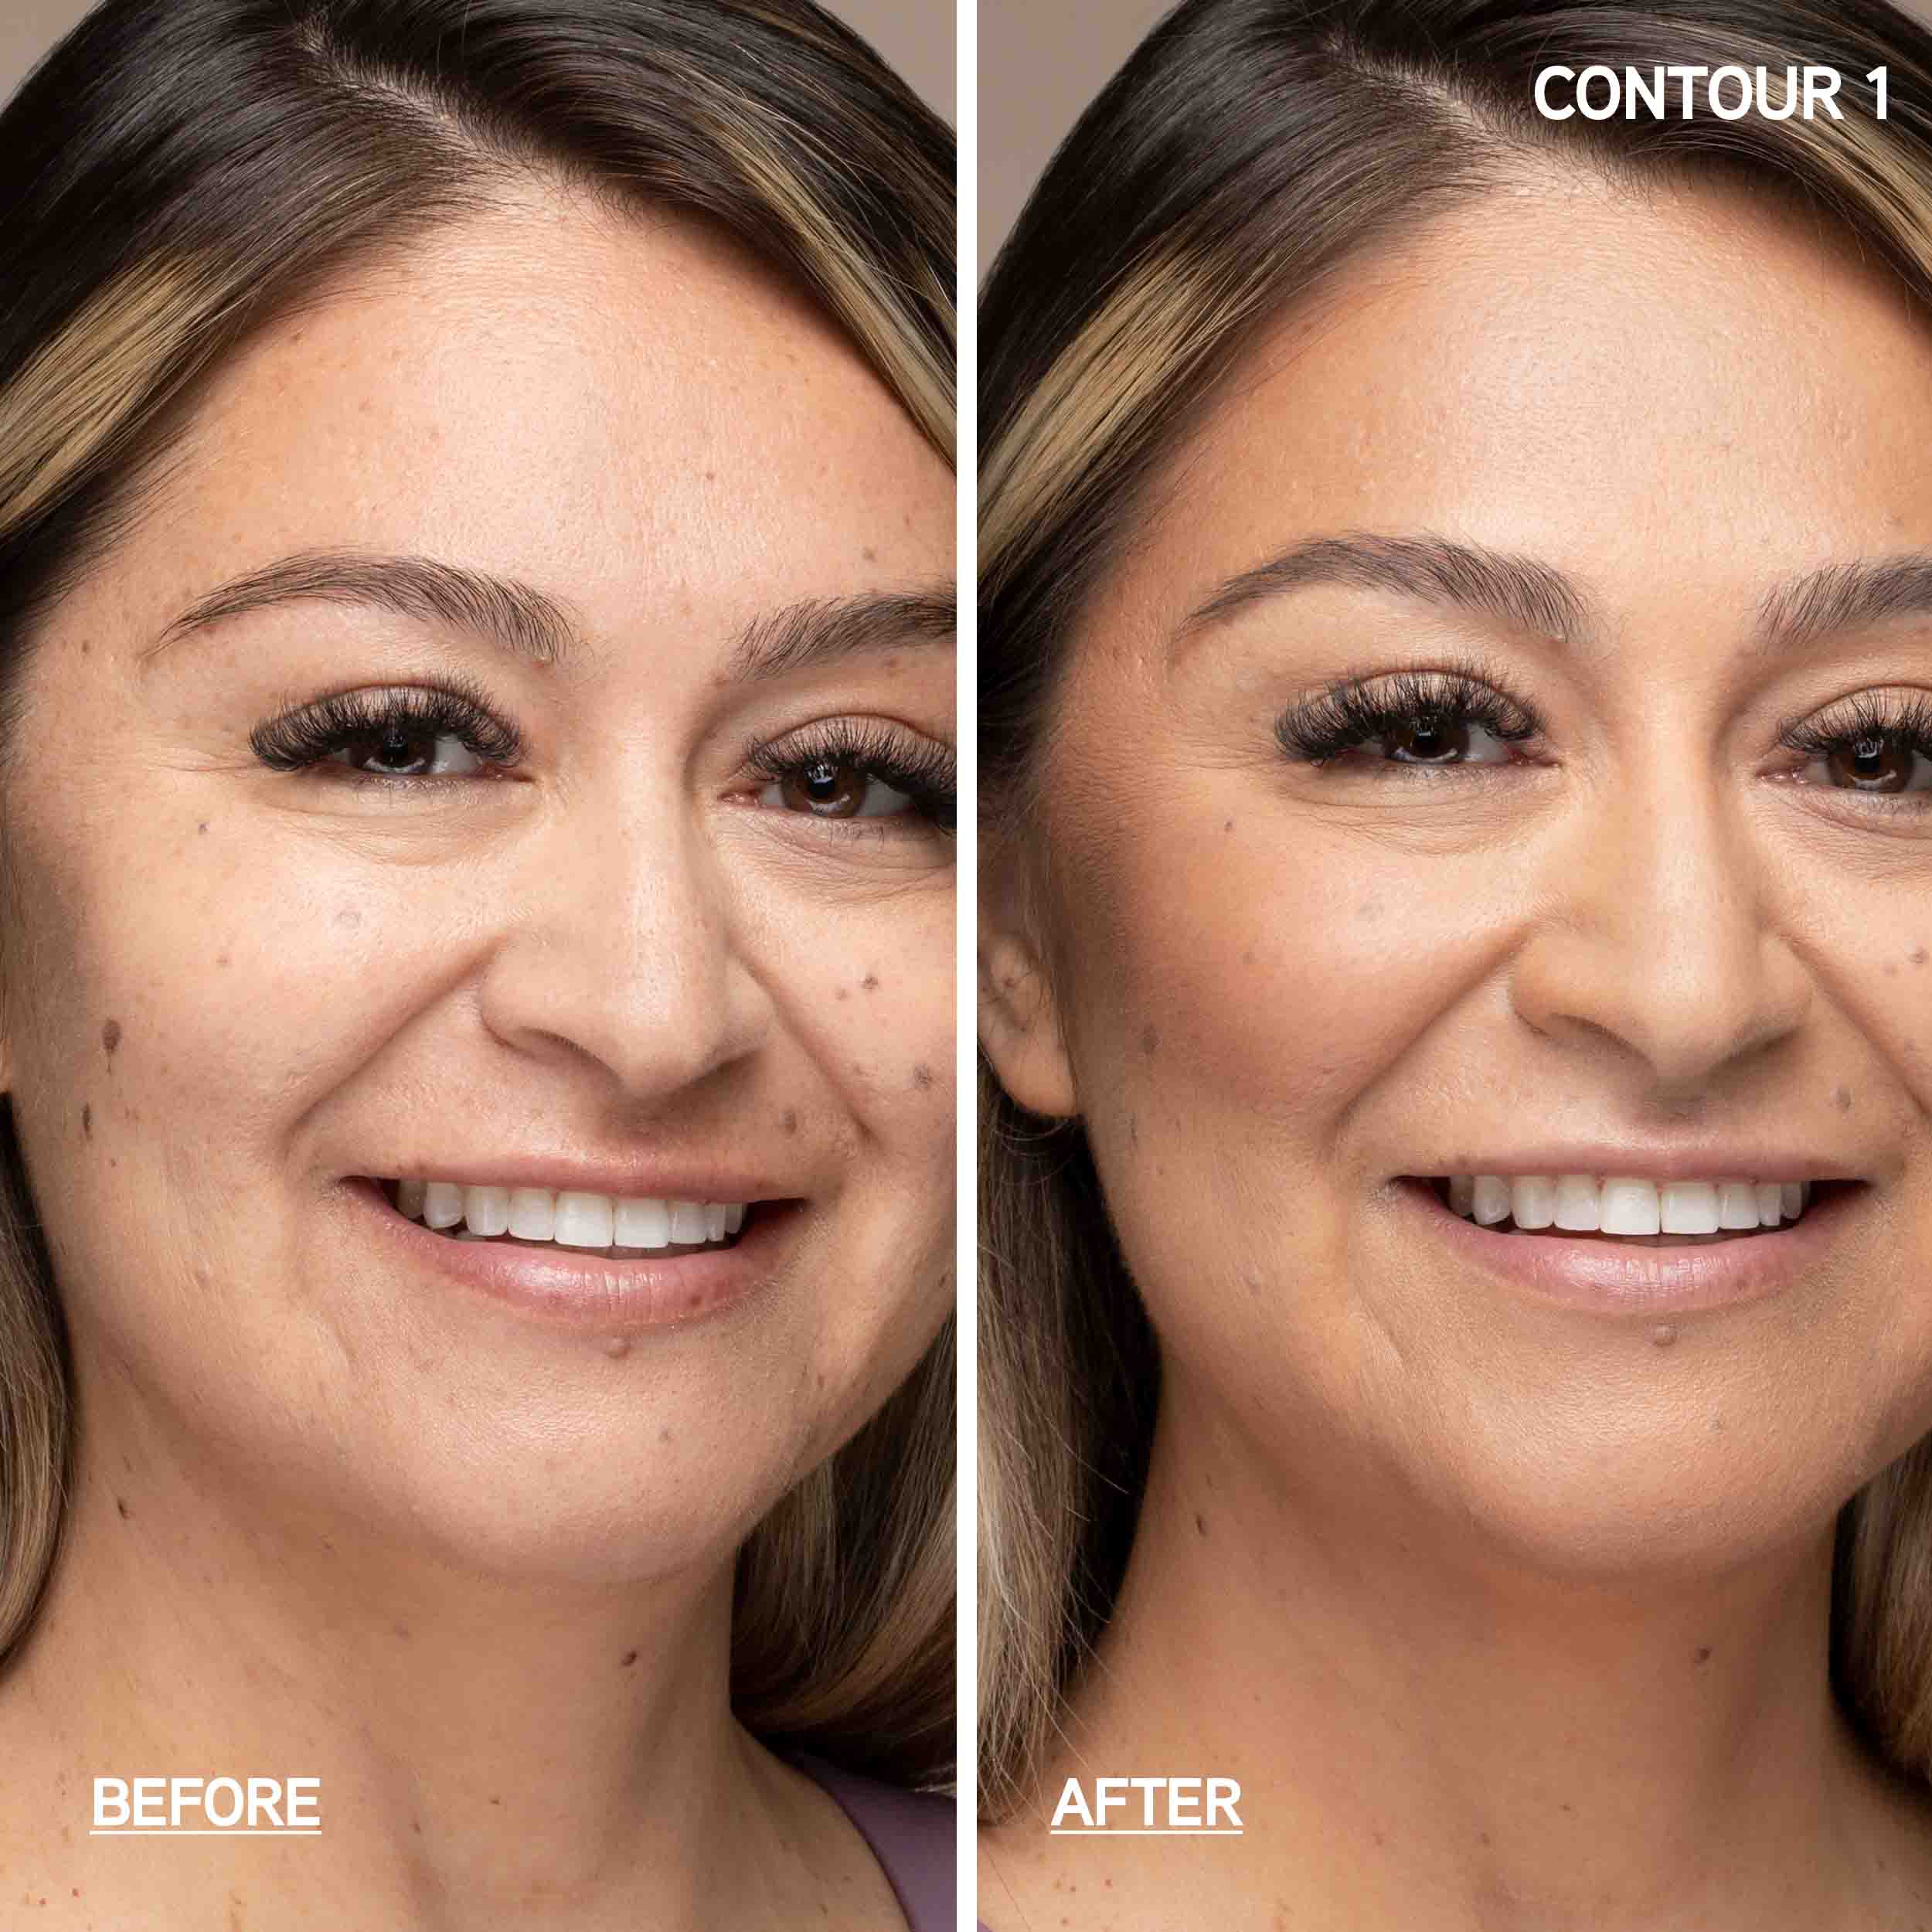 QIBEST Face Bronzer Makeup Contour Shade Concealer Brighten 3D Cosmetic  Makeup Glow Illuminator Highlight Smooth Bronzer Palette - AliExpress